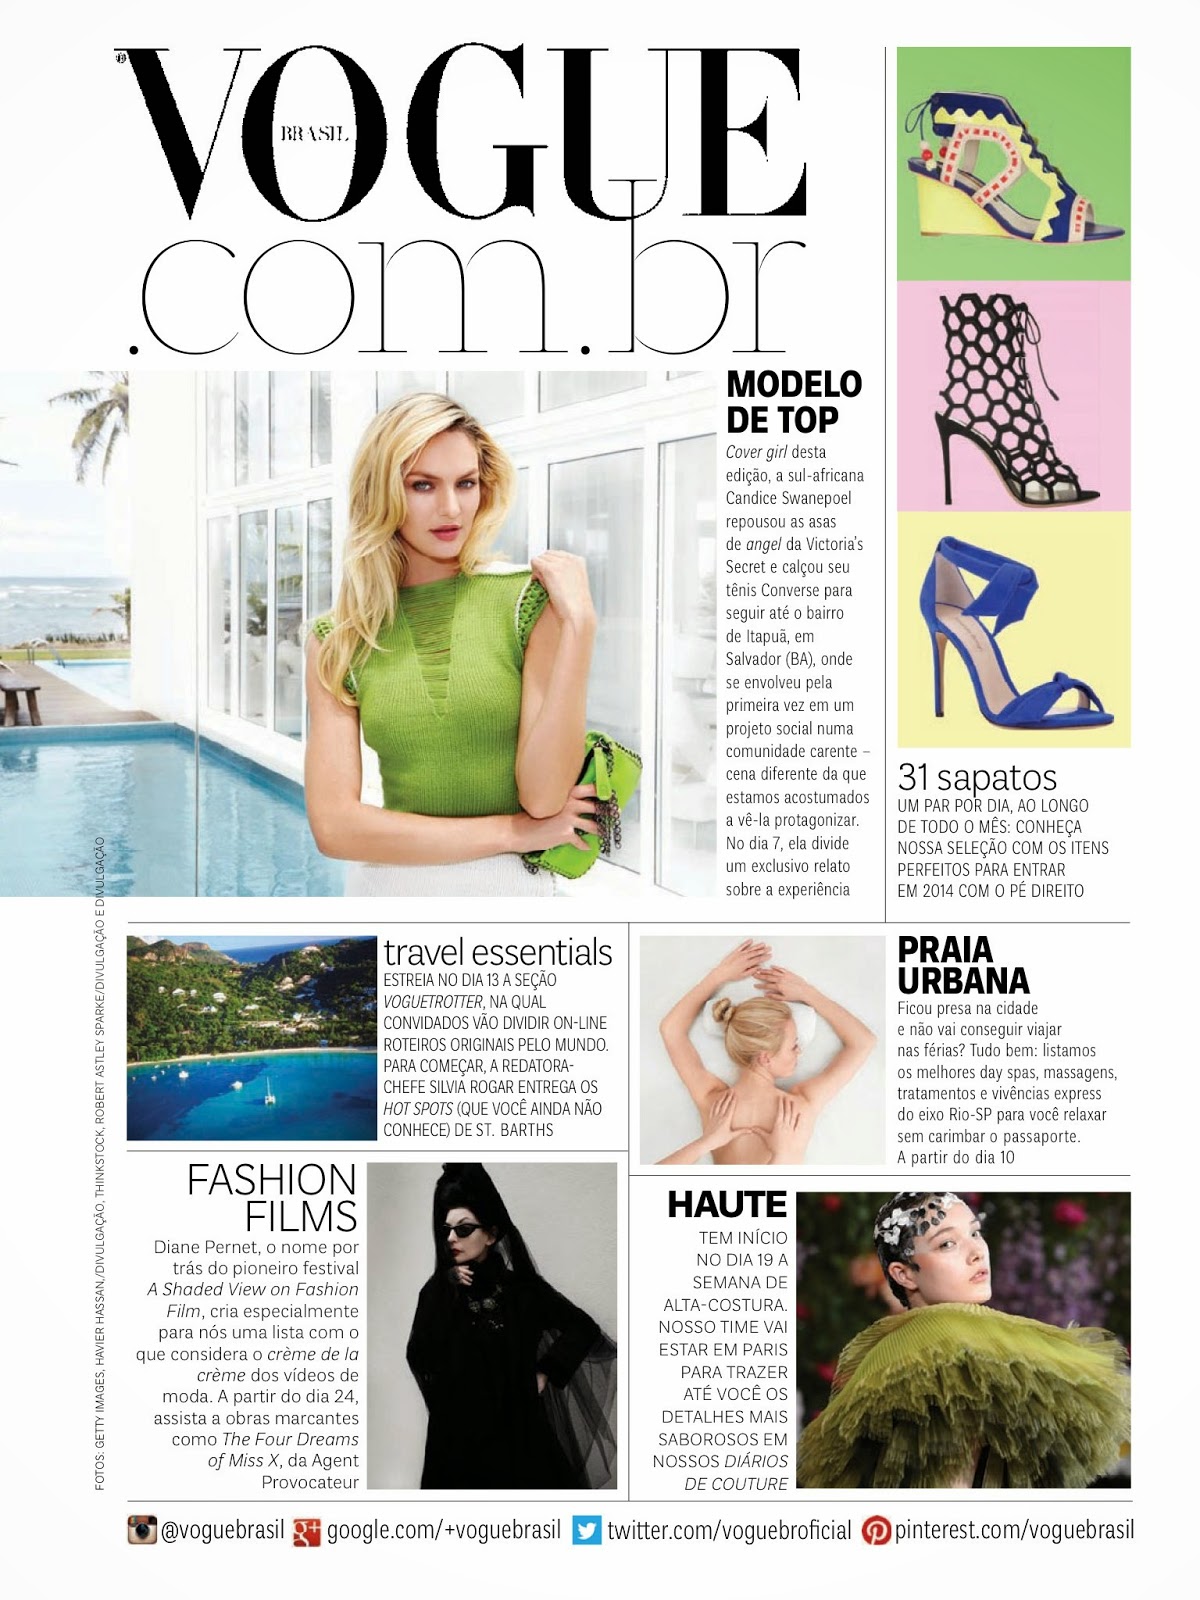 Candice Swanepoel By Vivanco, Nunes & Dequeker For Vogue Brazil